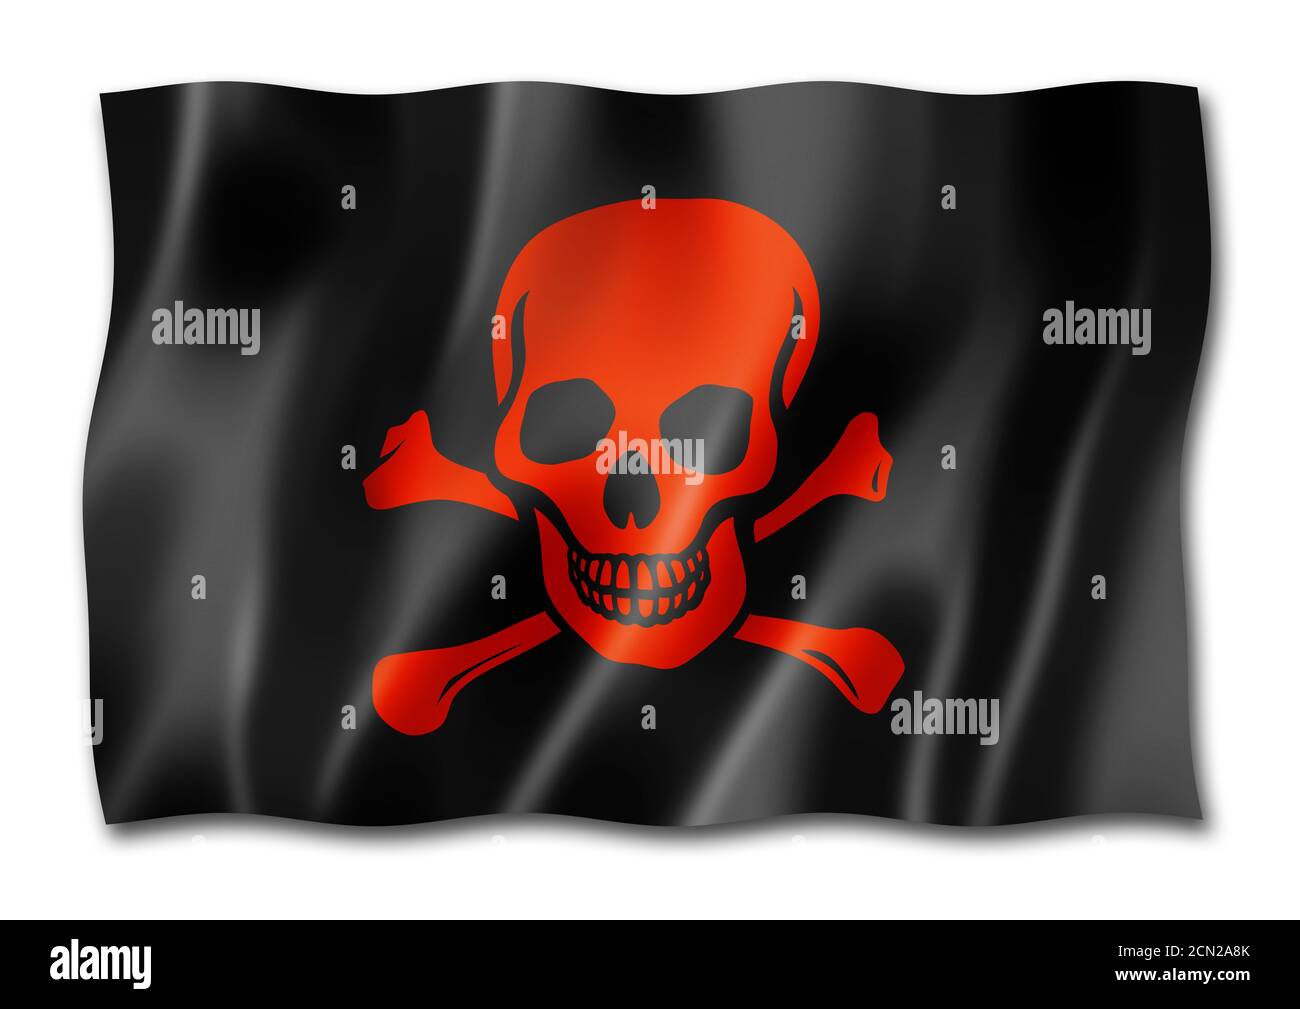 Wall Mural Jolly Roger Piraten Flagge Fahne säbel 